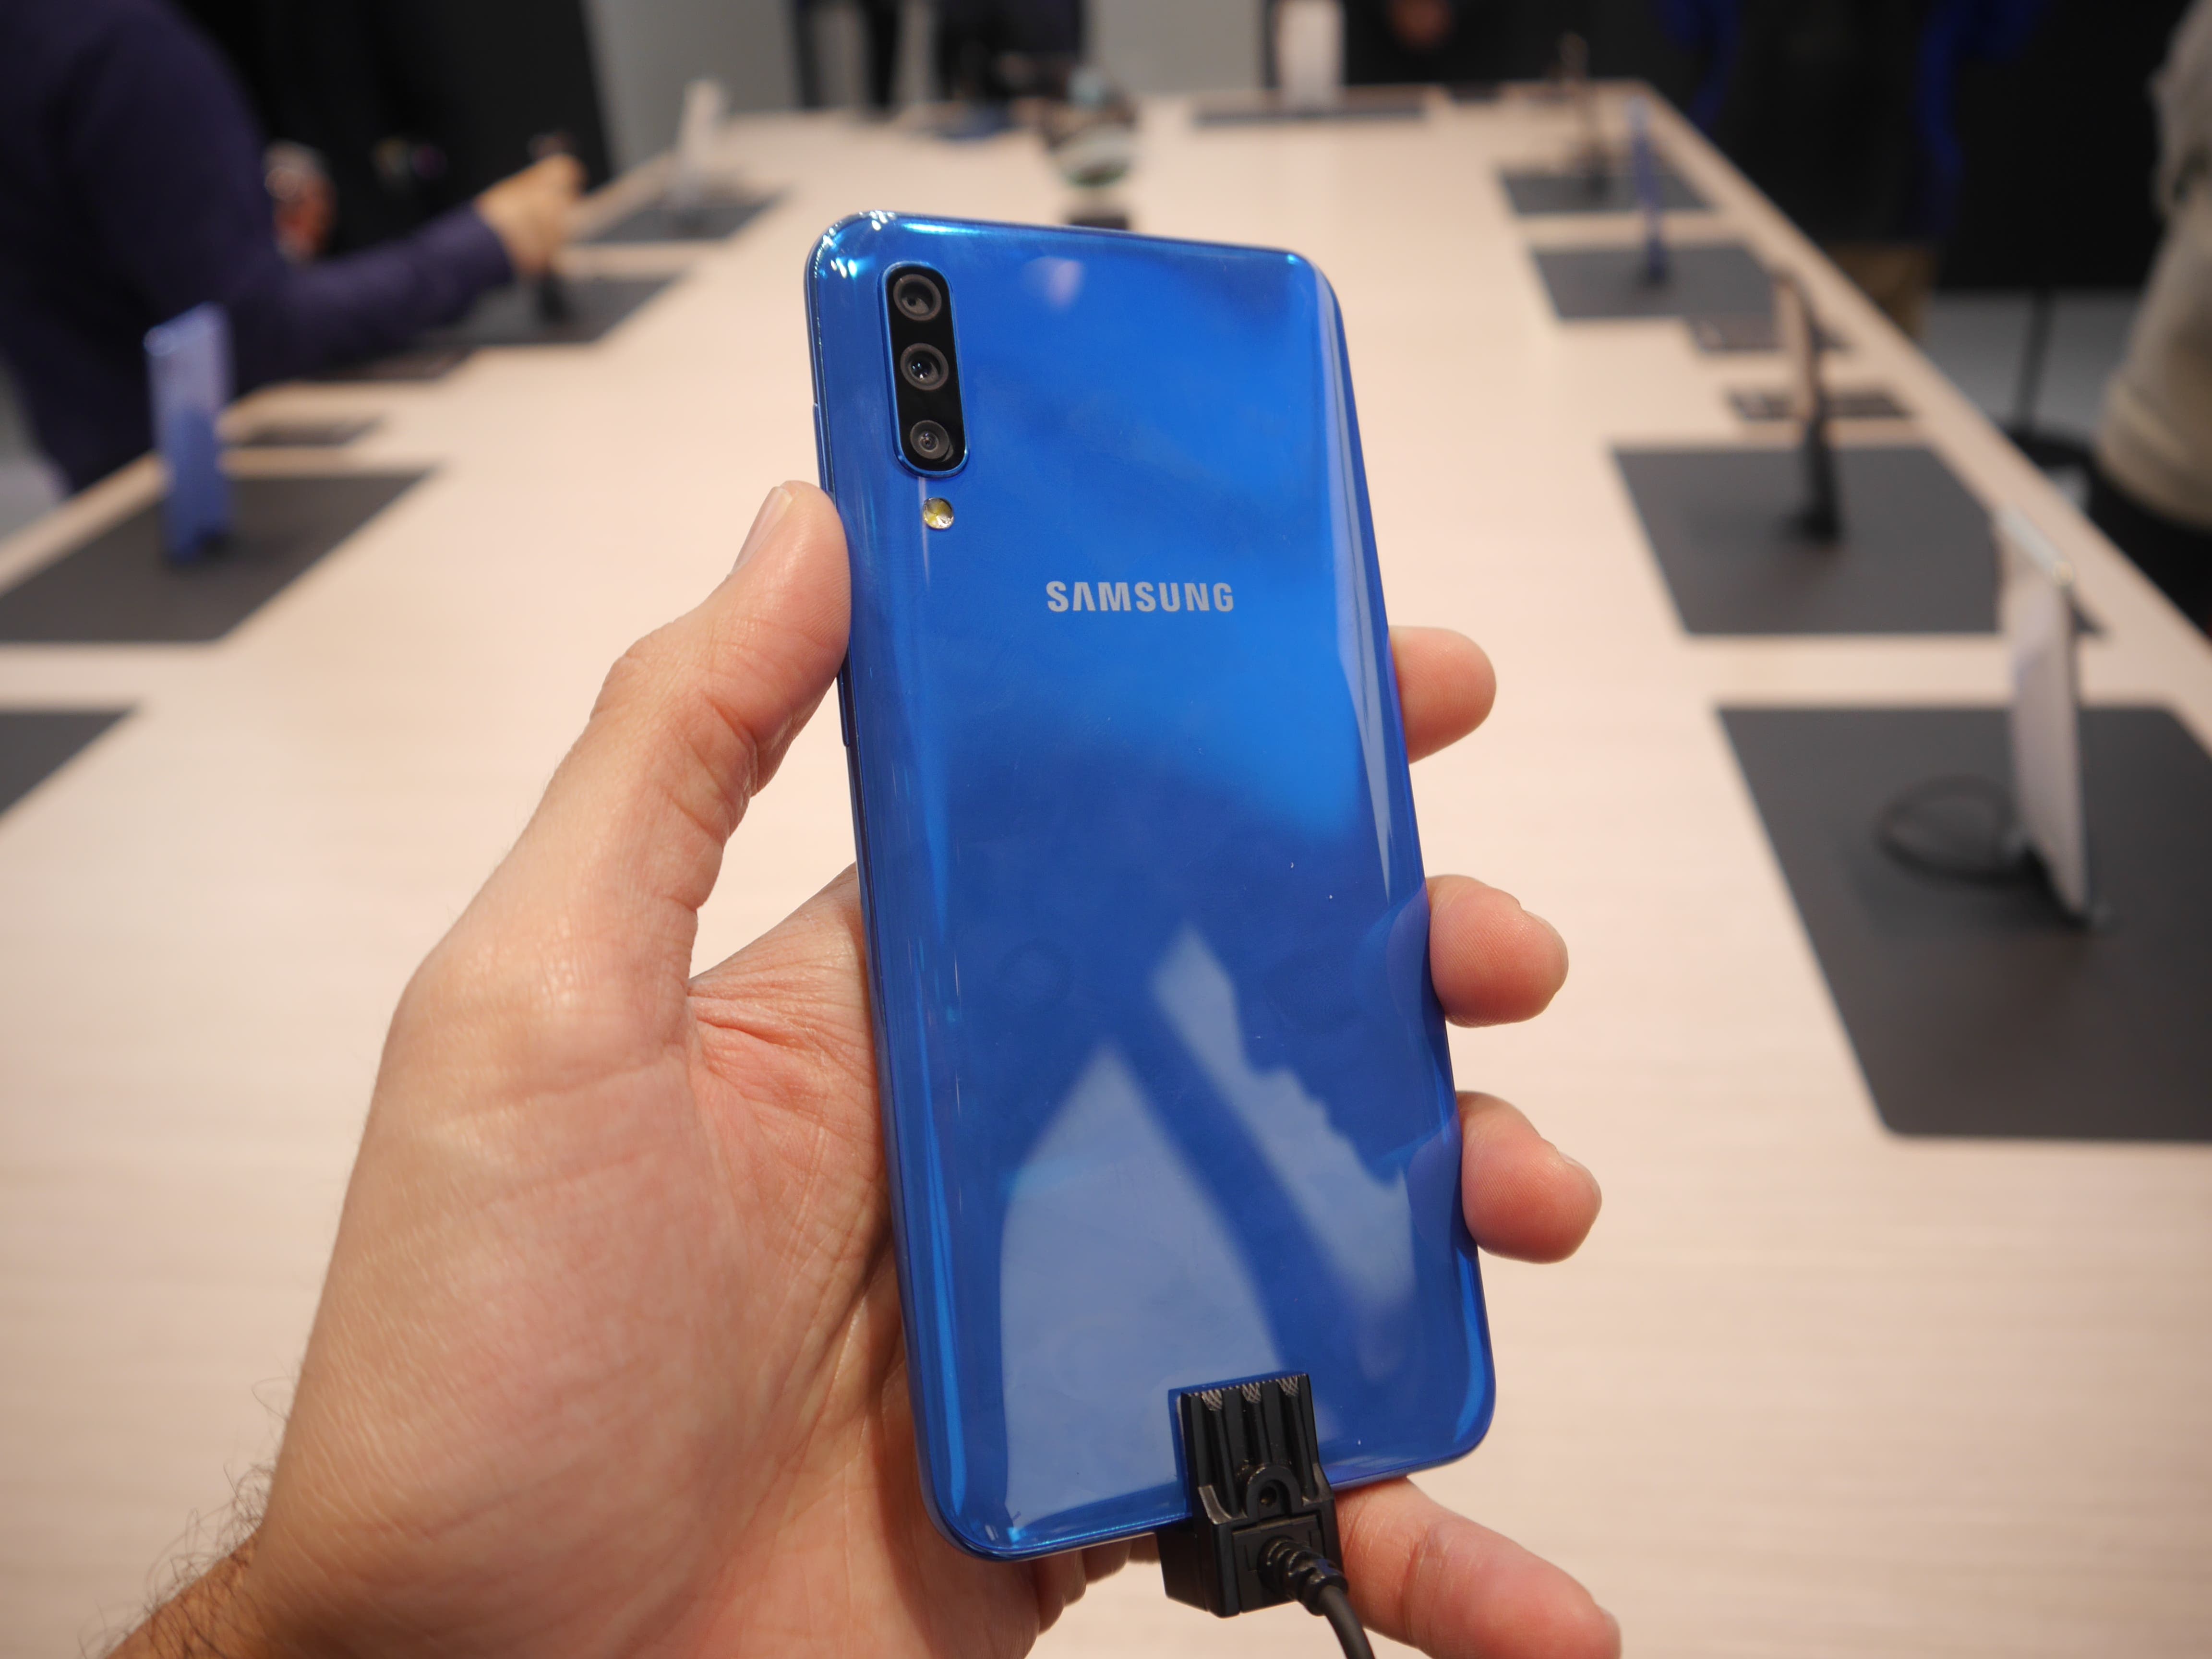 Samsung Galaxy A50 hands-on